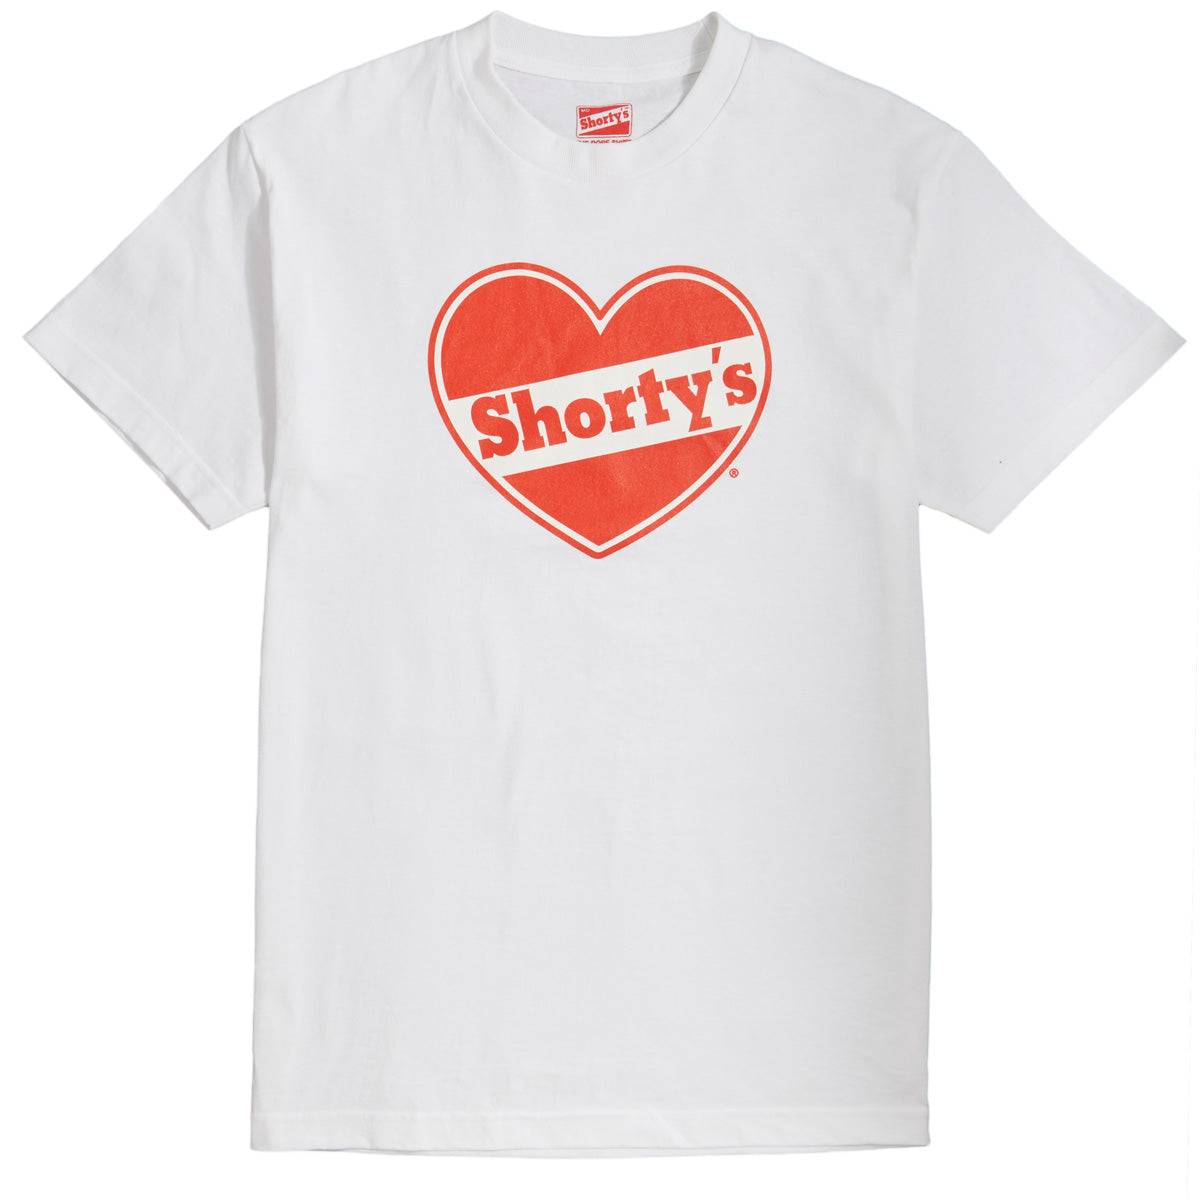 Shorty's Heart Logo T-Shirt - White image 1